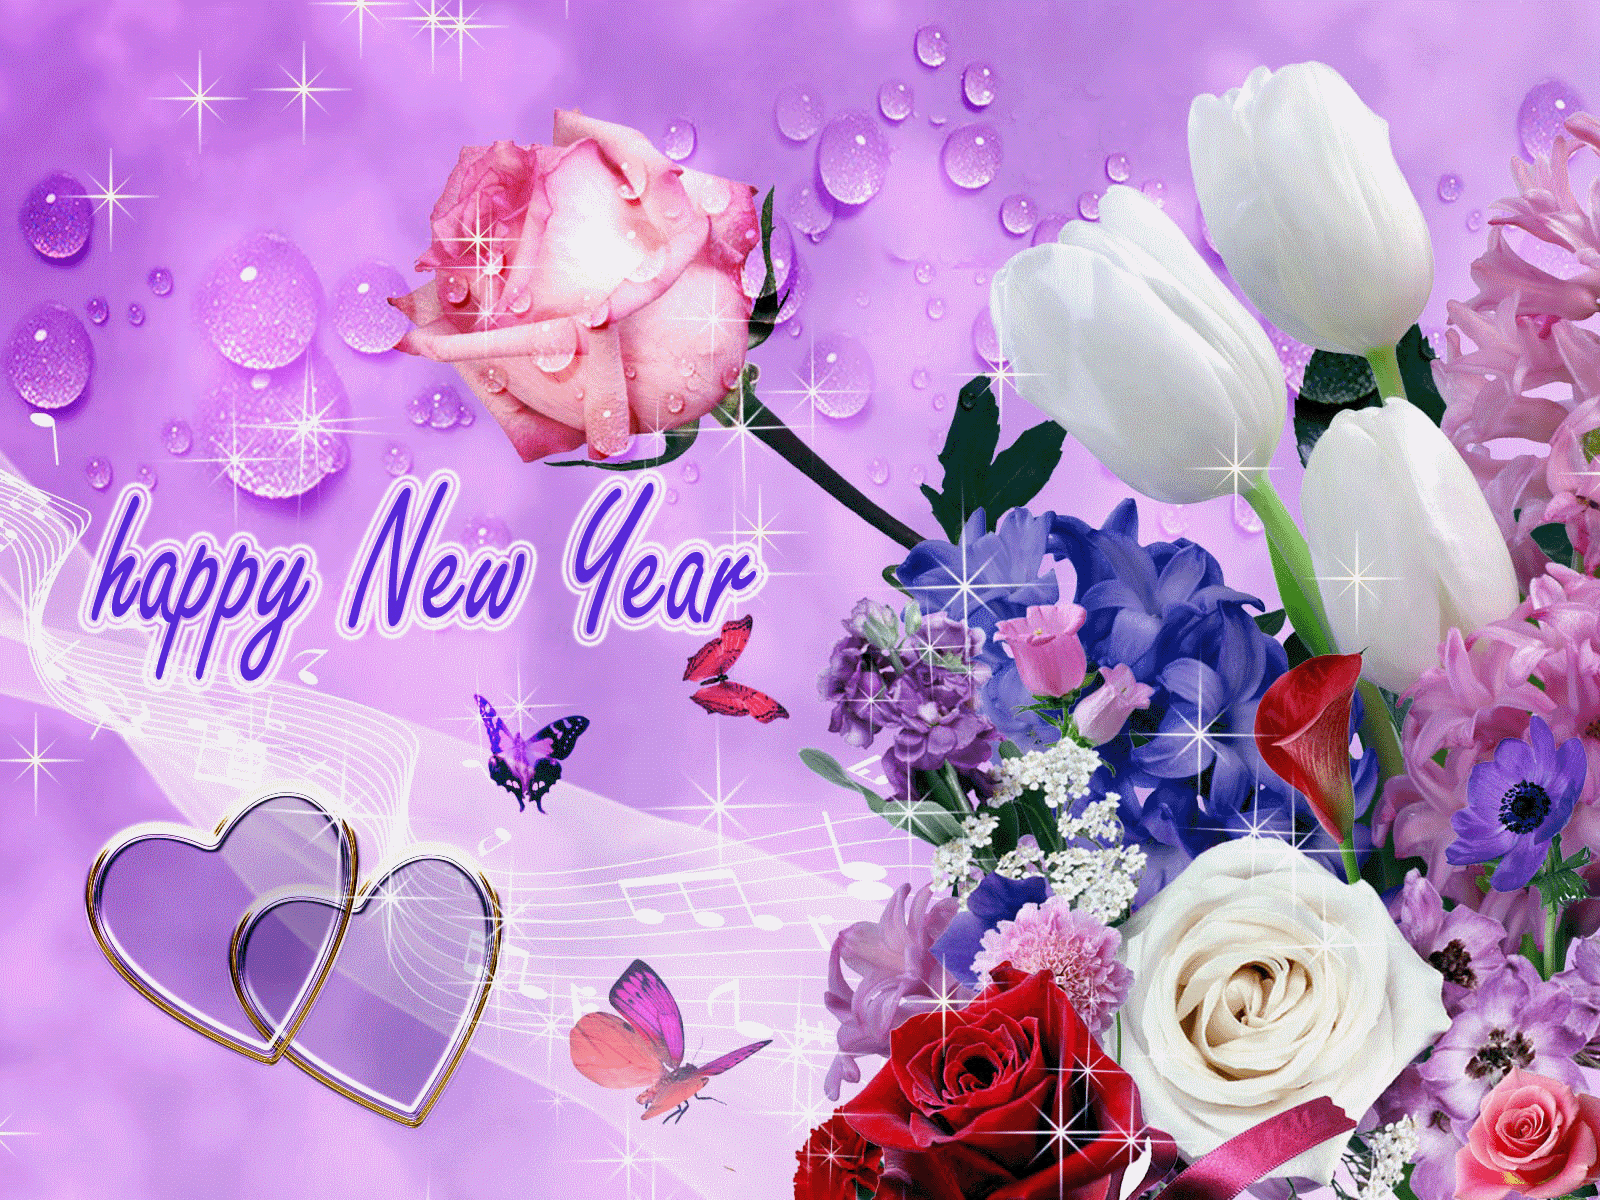 Happy New Year 2015 For iPad HD Wallpaper Wallpaper computer